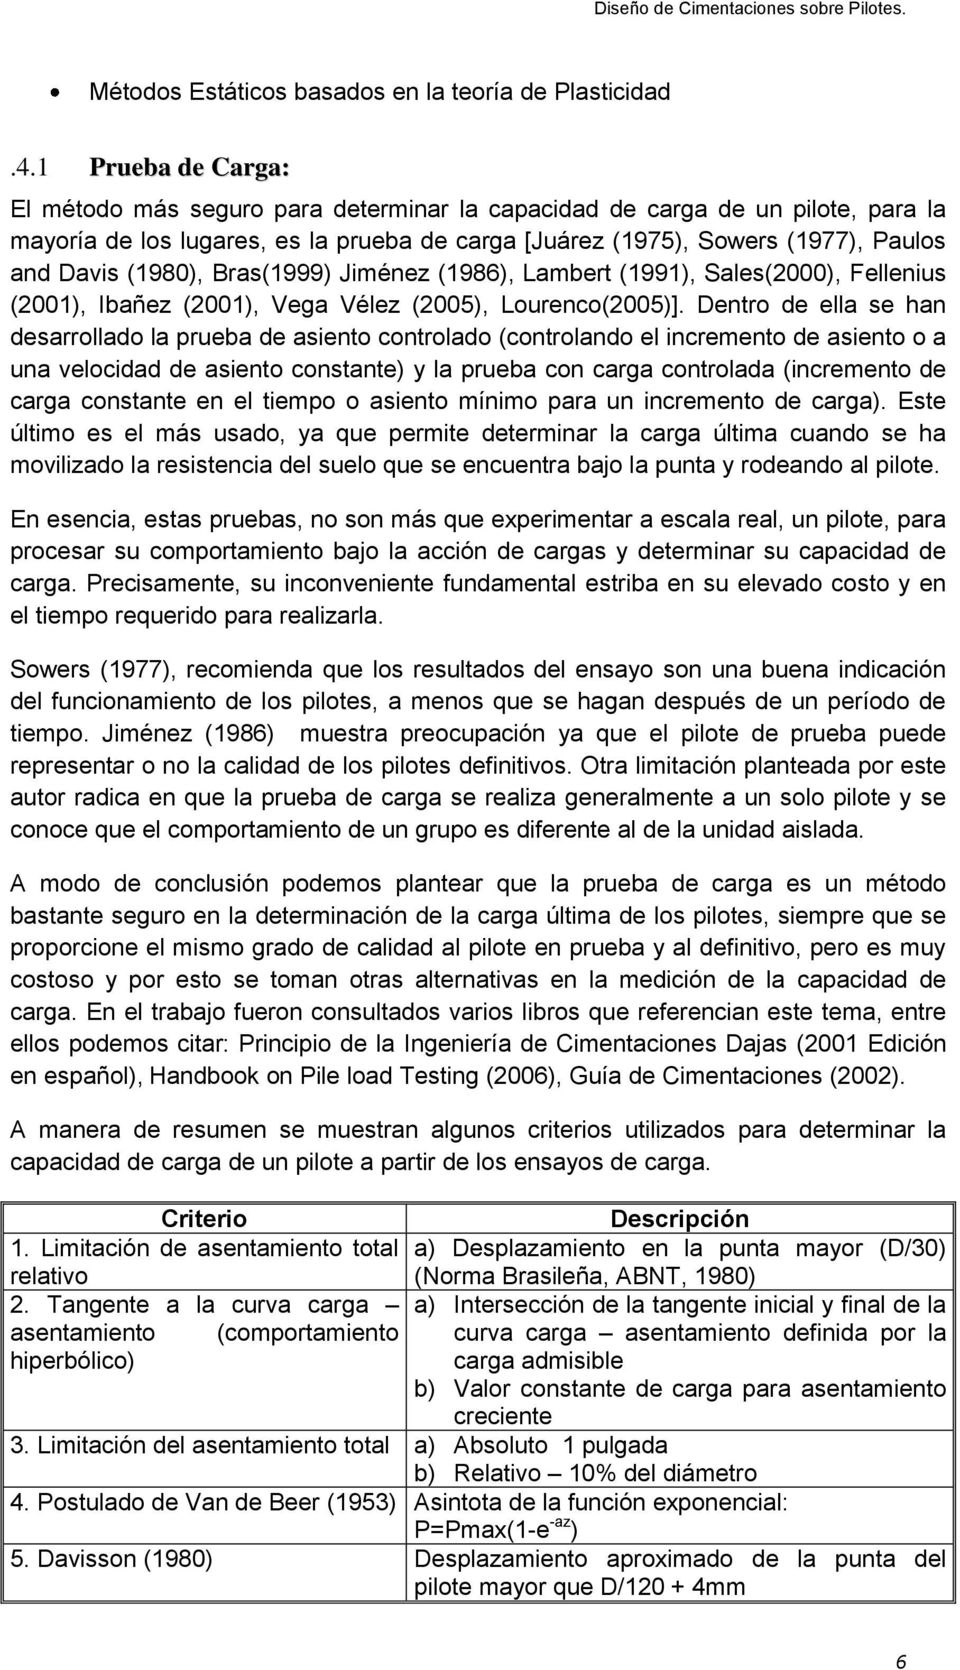 (1980), Bras(1999) Jiménez (1986), Lambert (1991), Sales(2000), Fellenius (2001), Ibañez (2001), Vega Vélez (2005), Lourenco(2005)].